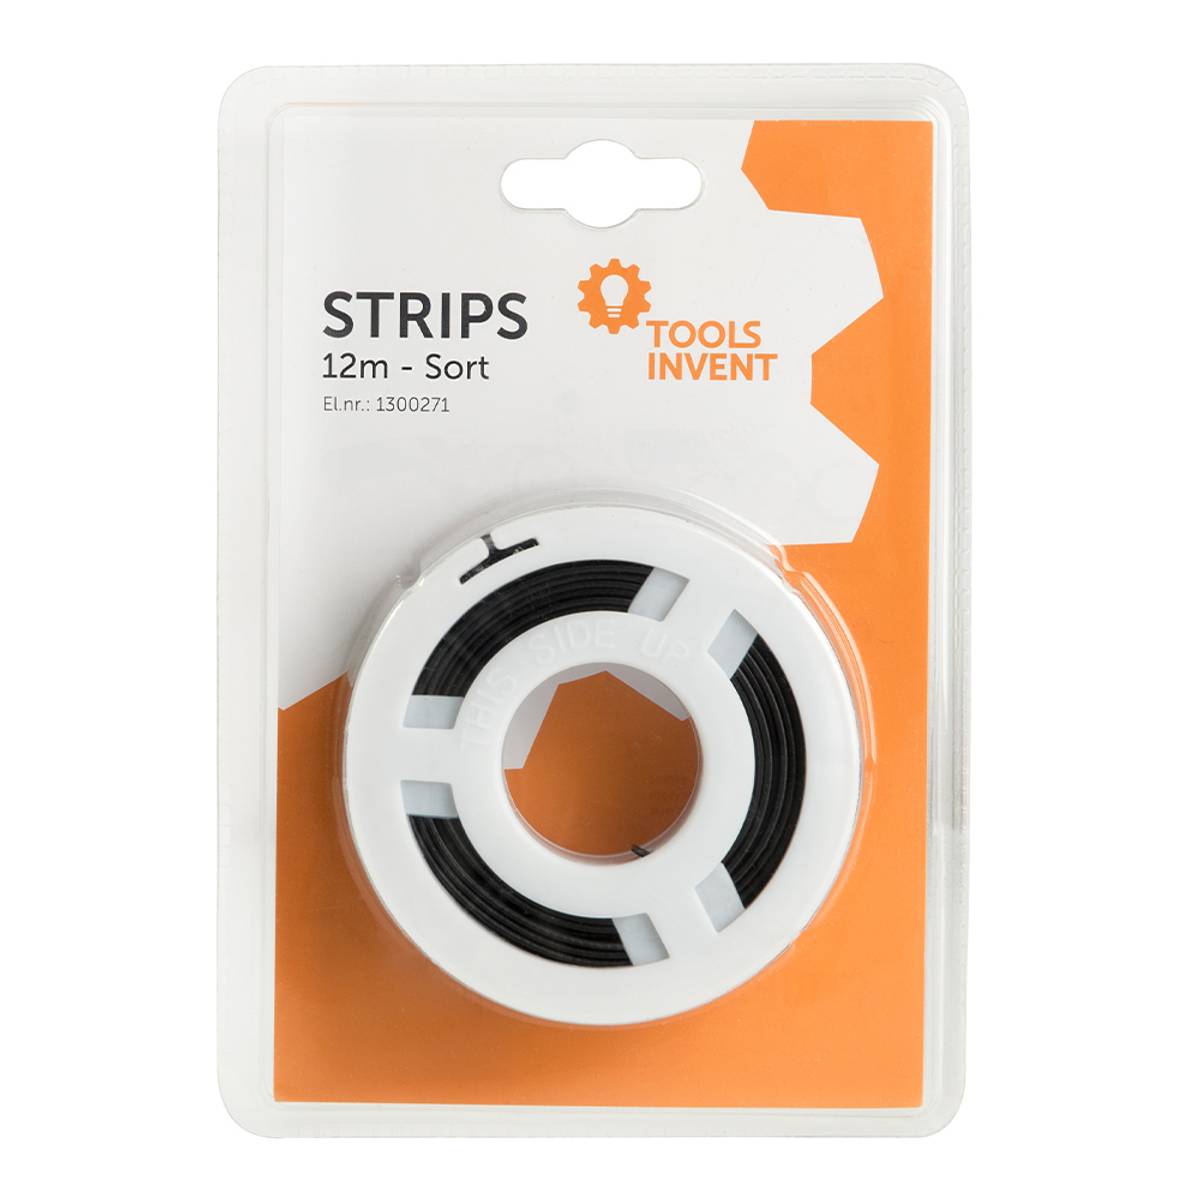 Smart strips 12m sort refill bånd